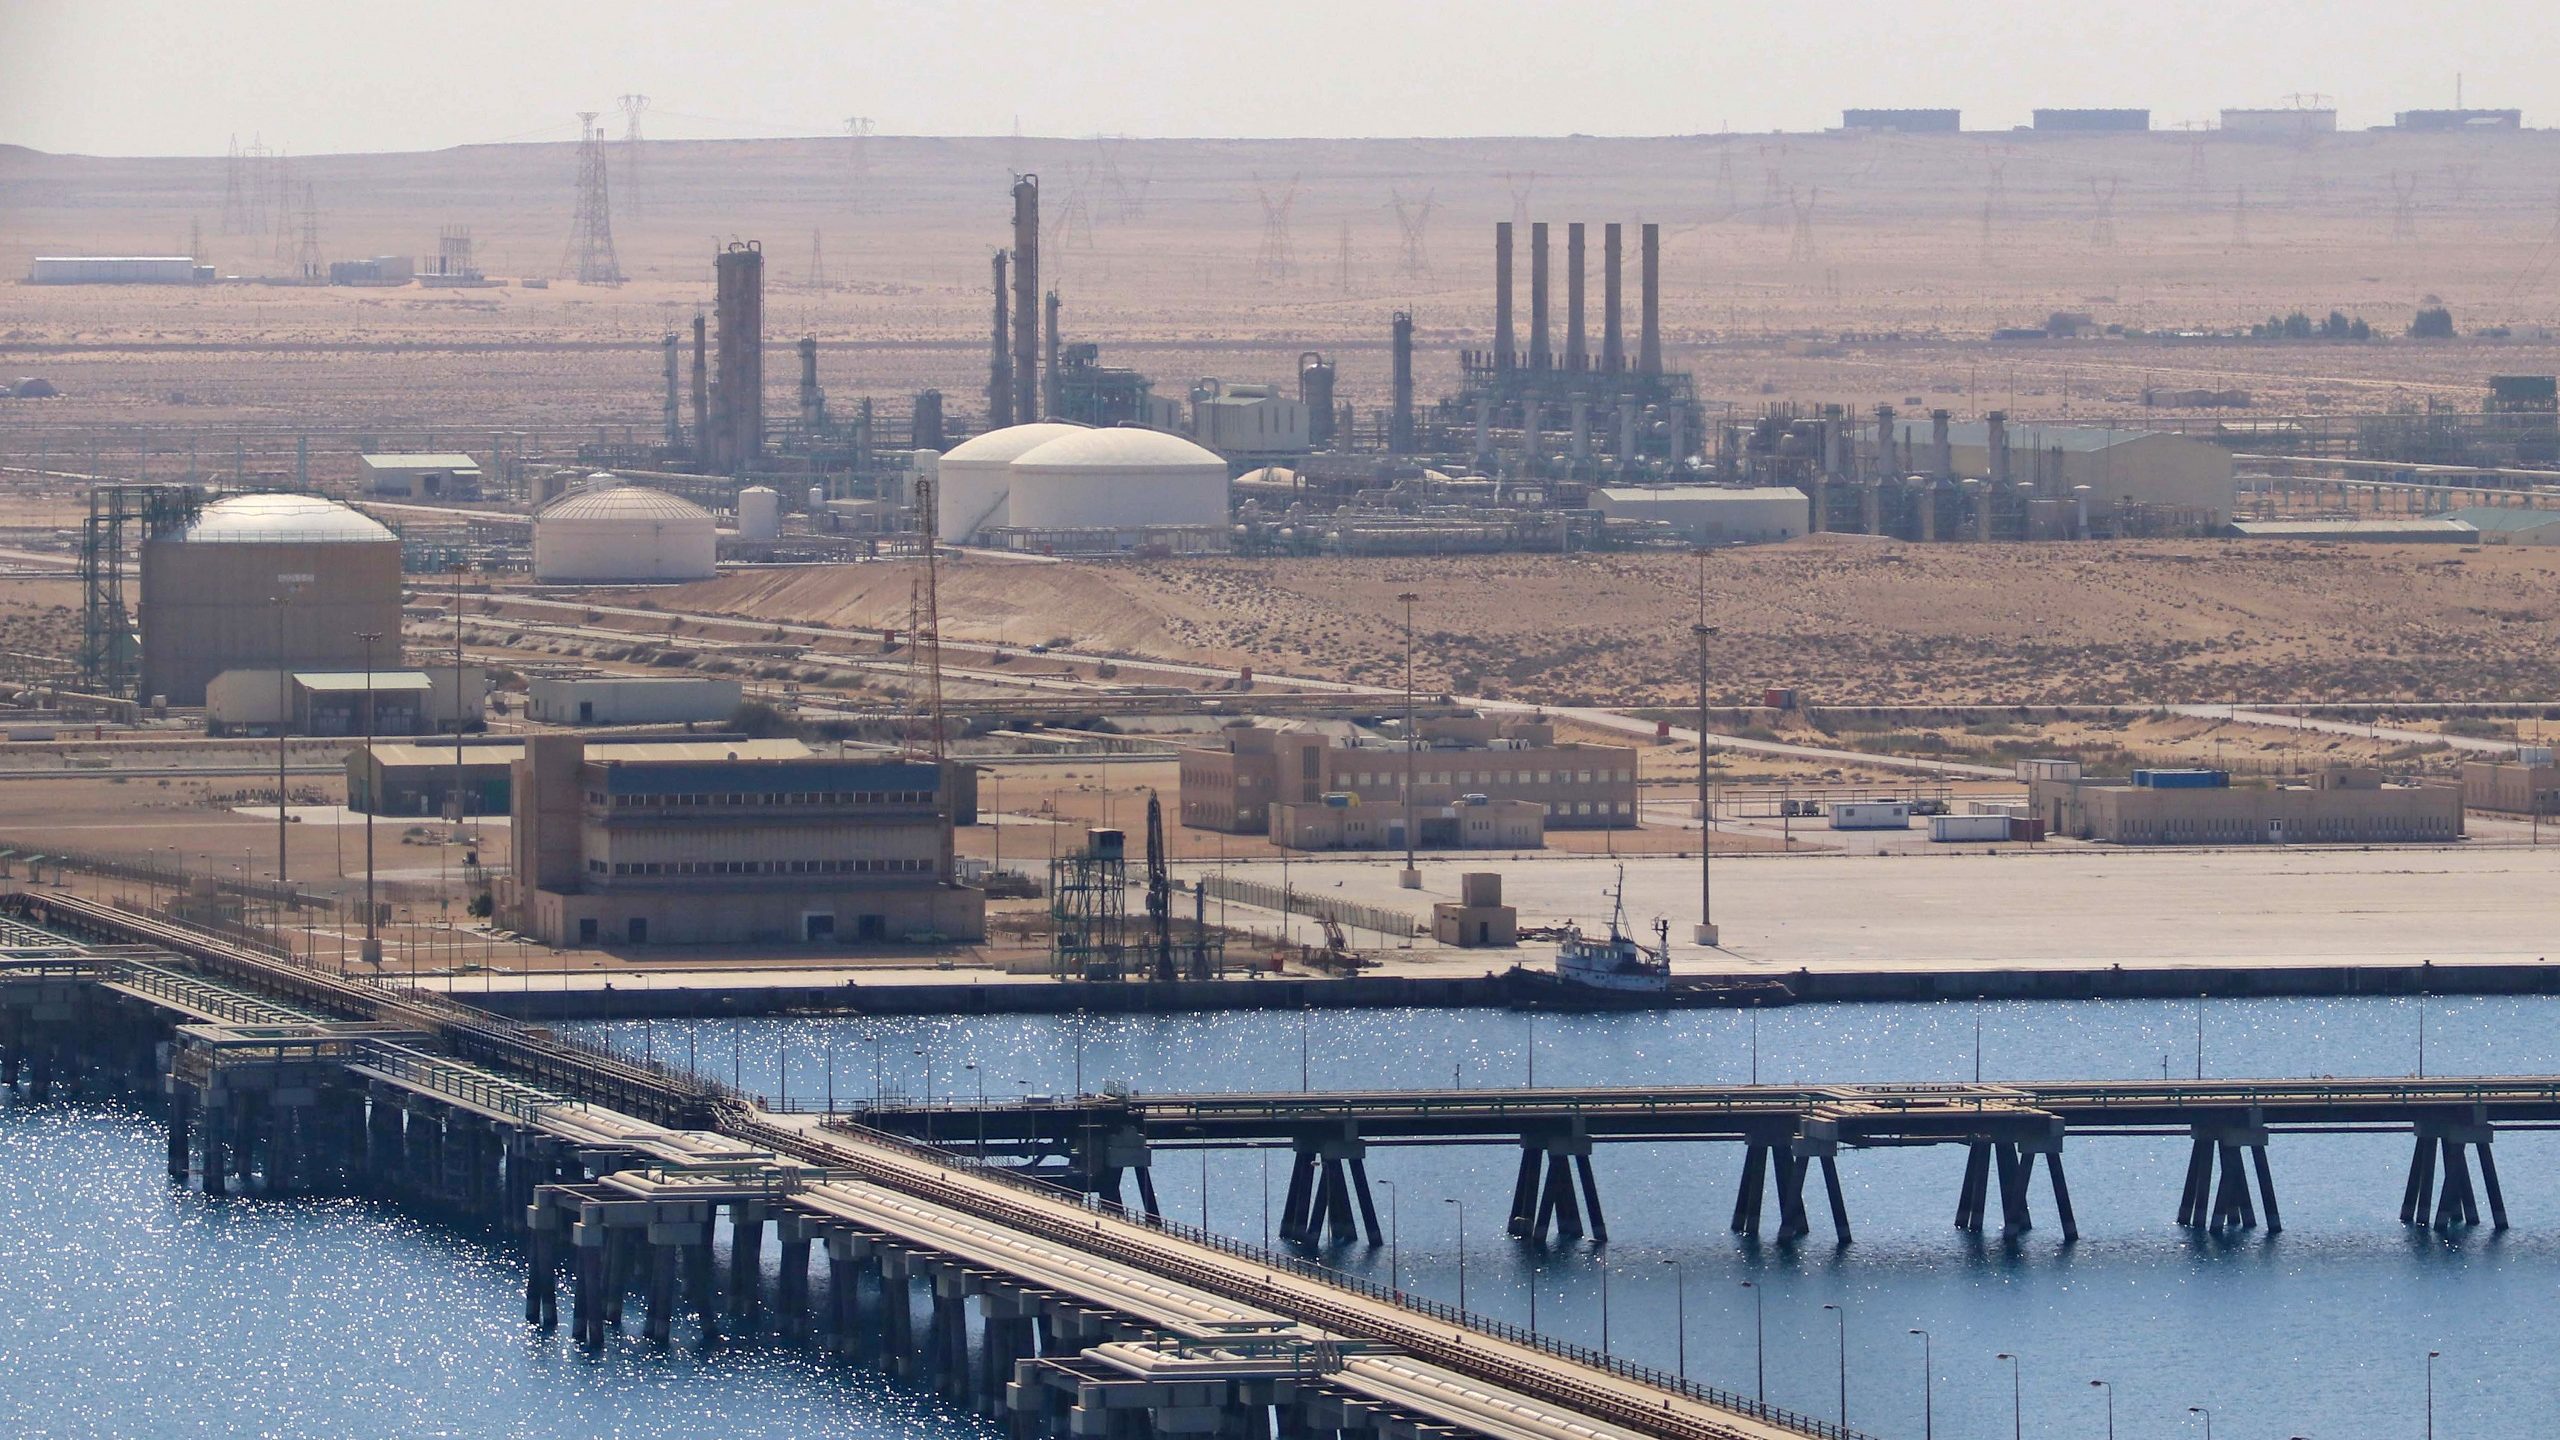 Protesters Shut Down Main Oil Fields in Libya